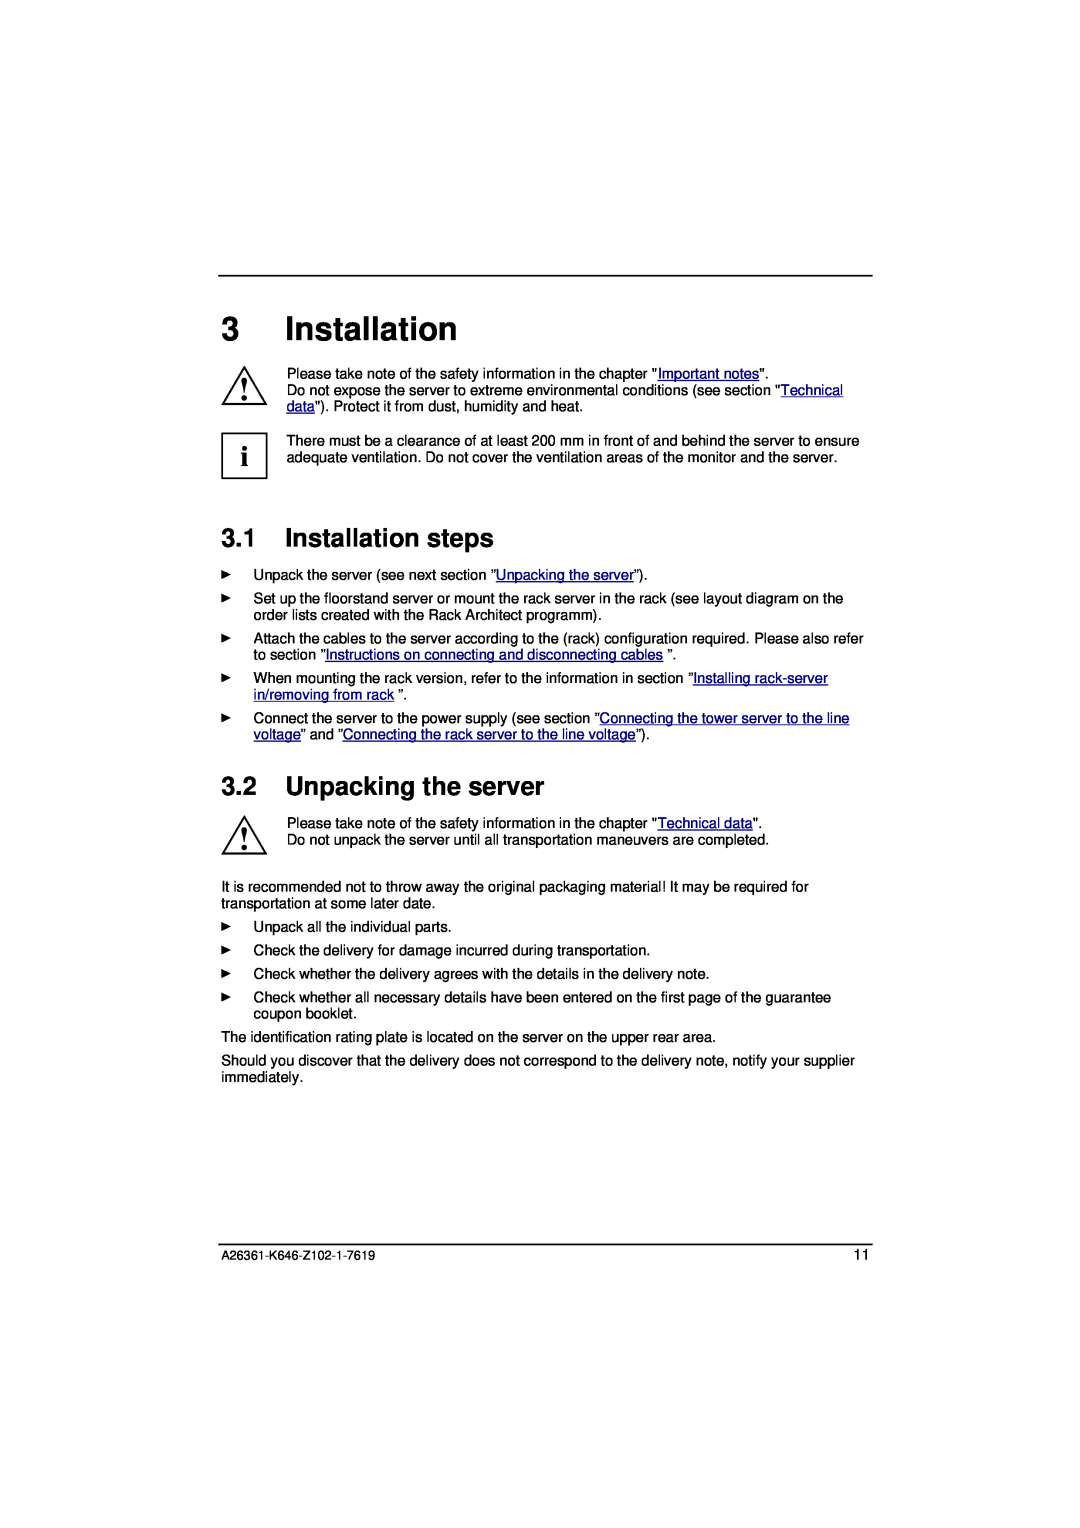 Fujitsu B120 manual Installation steps, Unpacking the server 